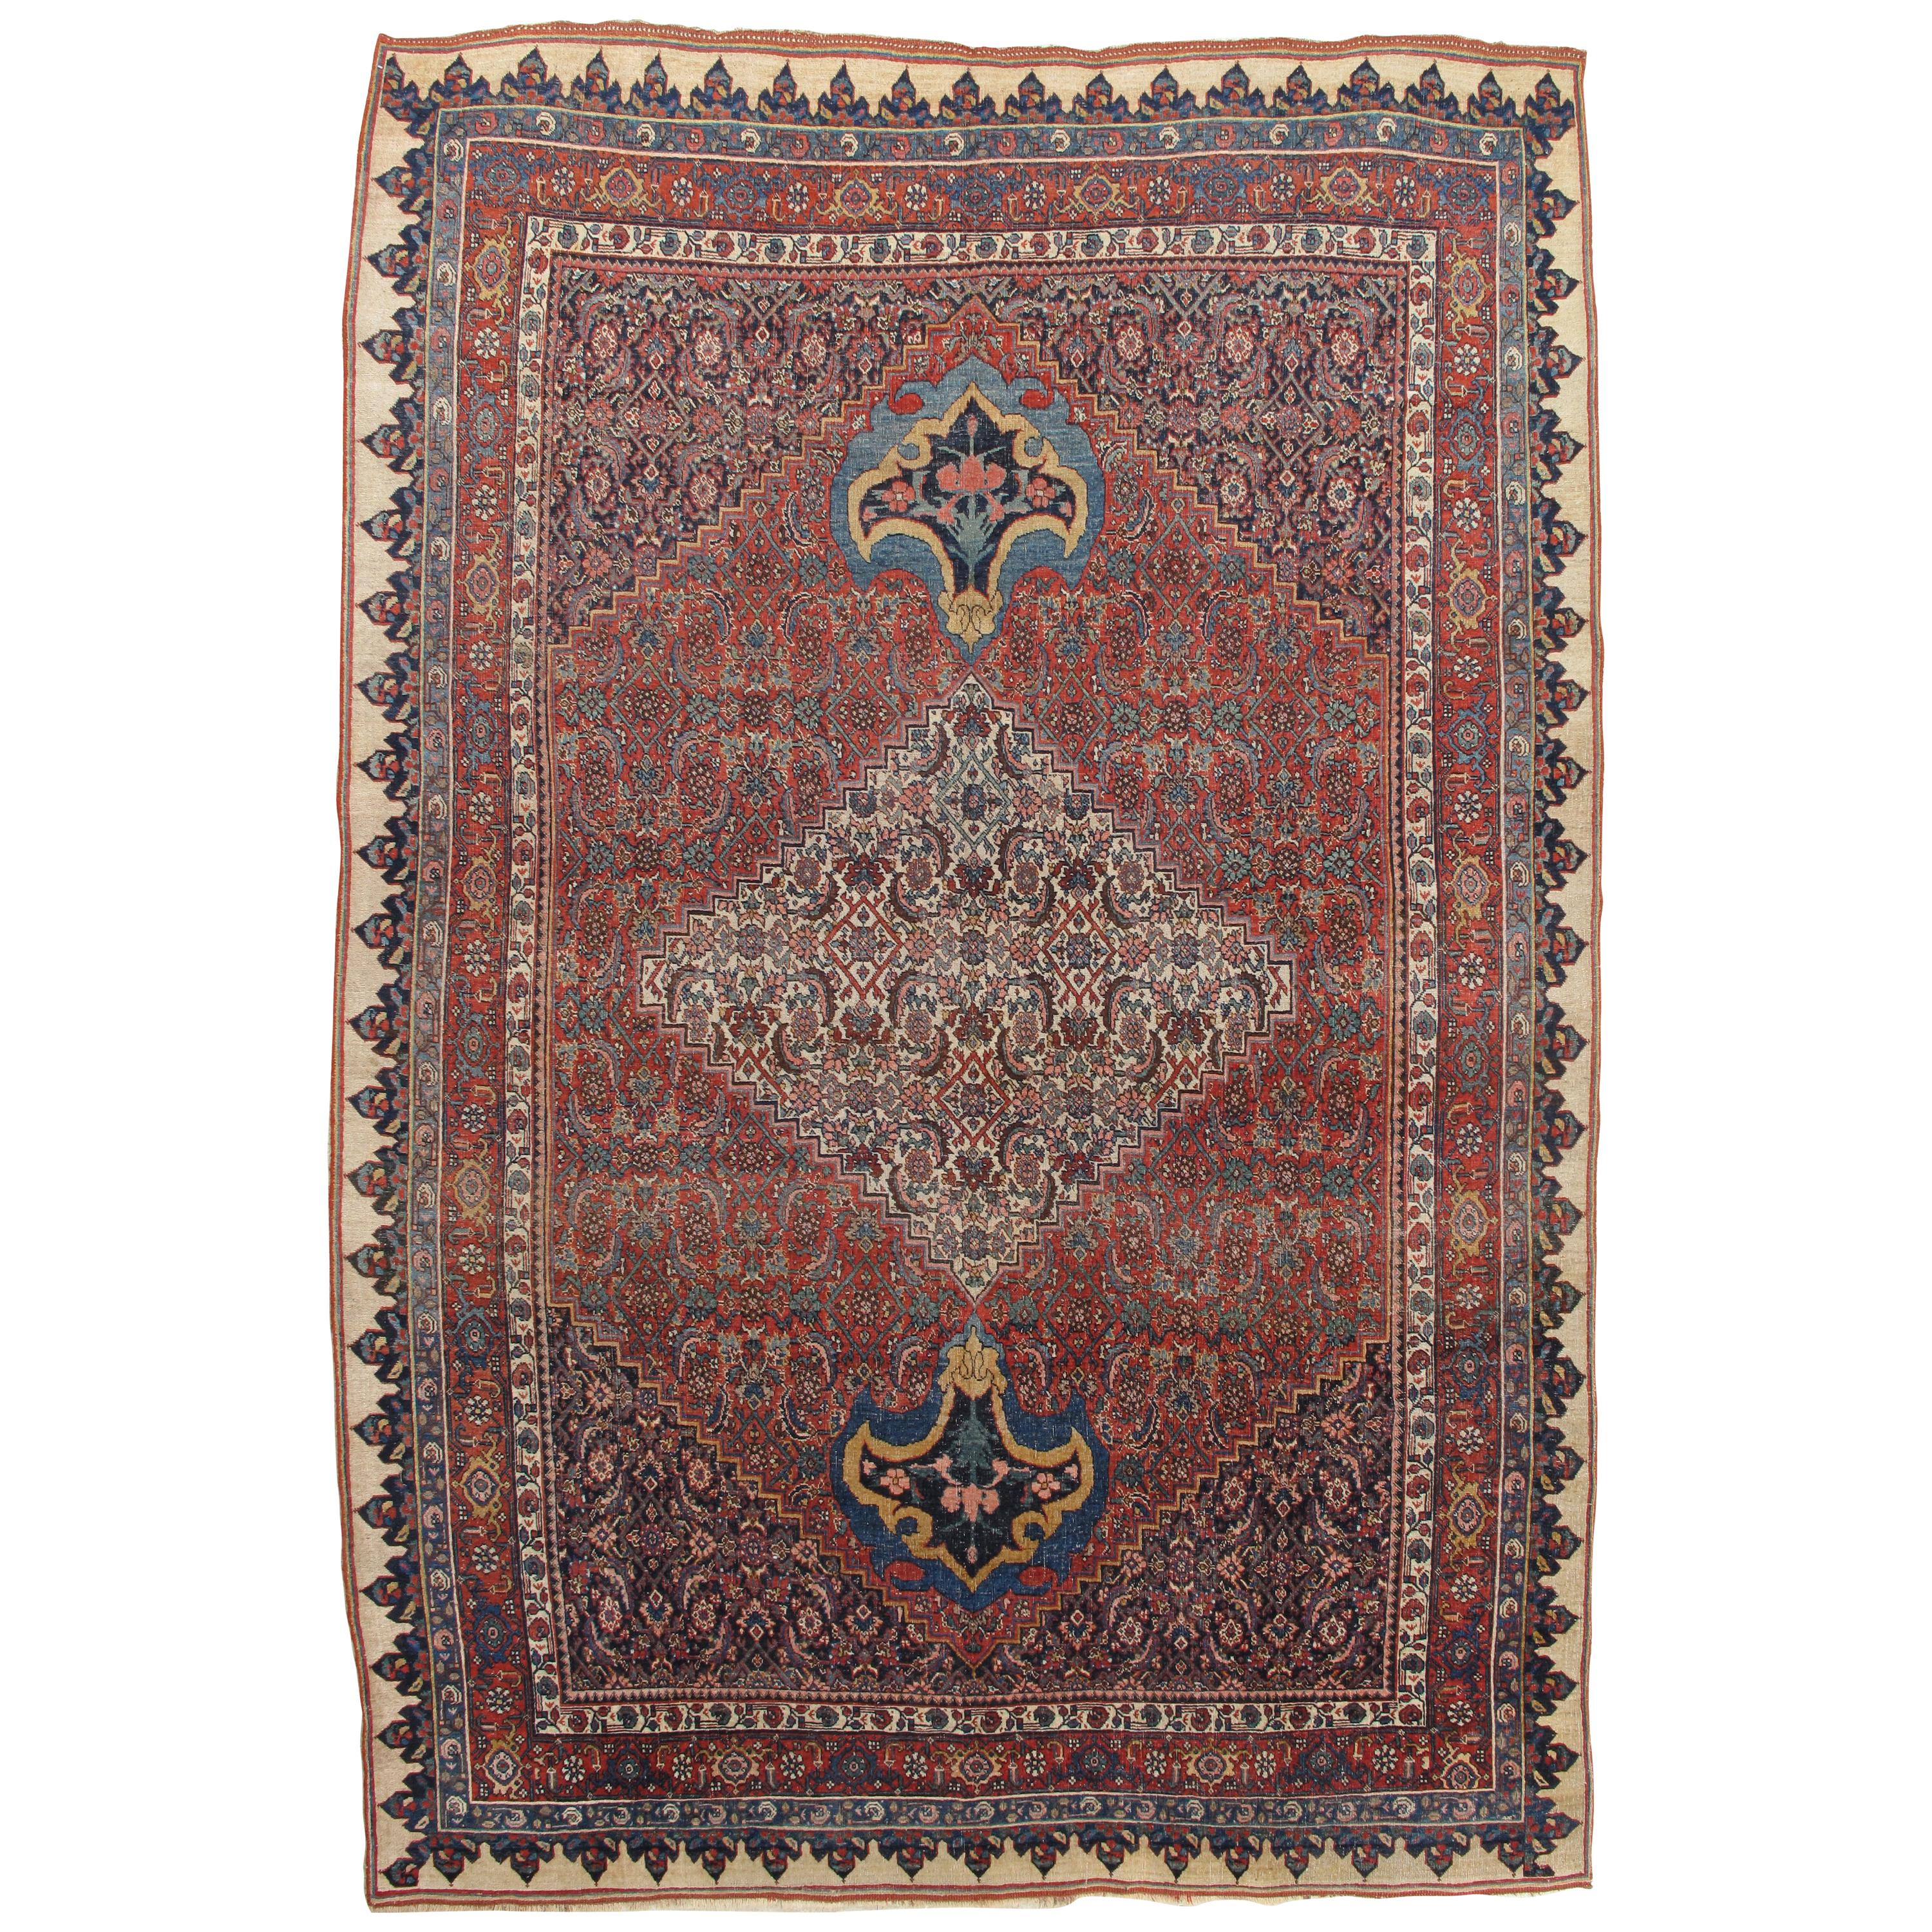 Antique Bijar Carpet Oriental Rug, Handmade, Ivory, Rust, Light Blue, Terracotta For Sale